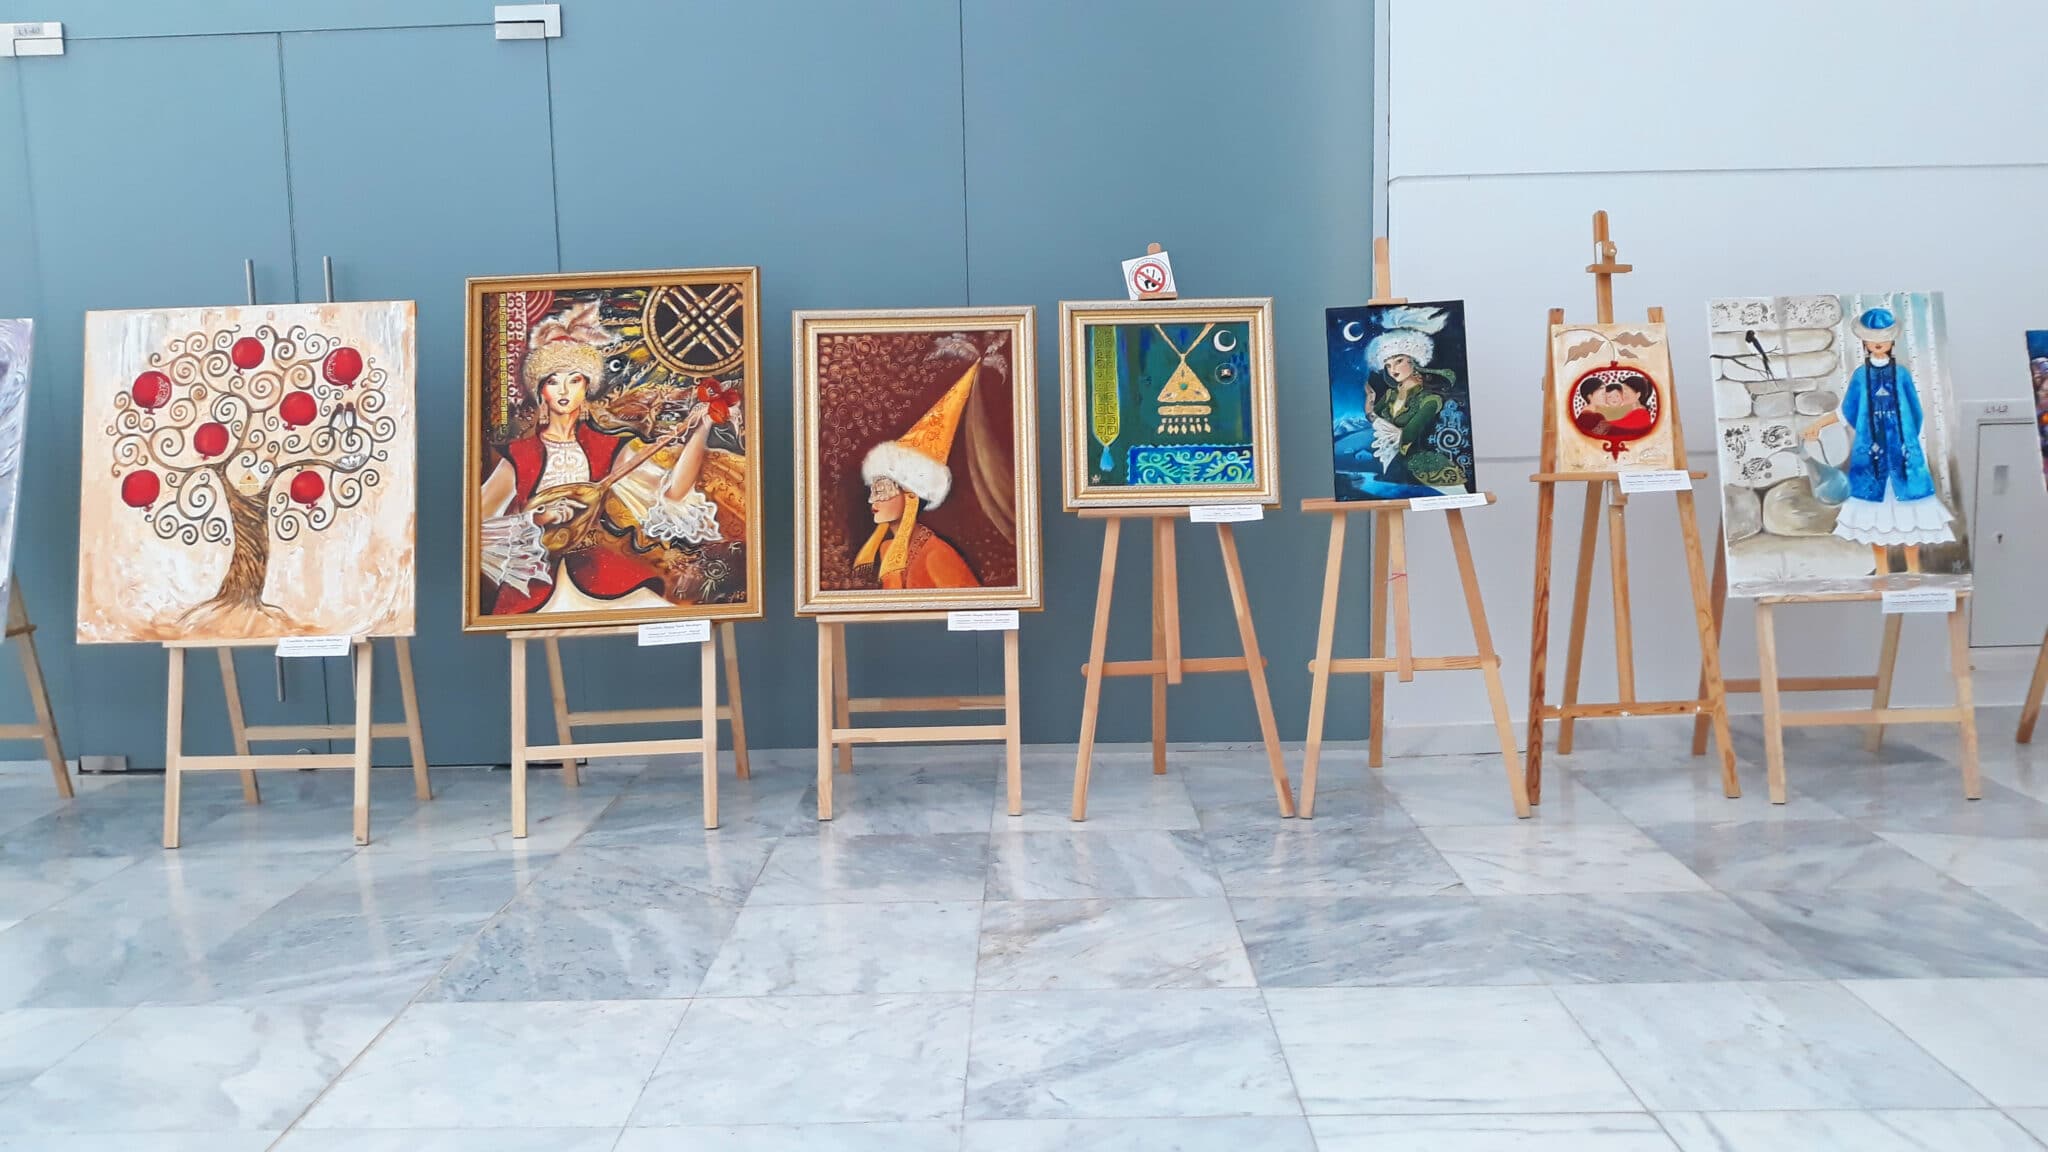 Info Shymkent - Art gallery with paintings from Kazakh artist Aisulu Almasbayeva